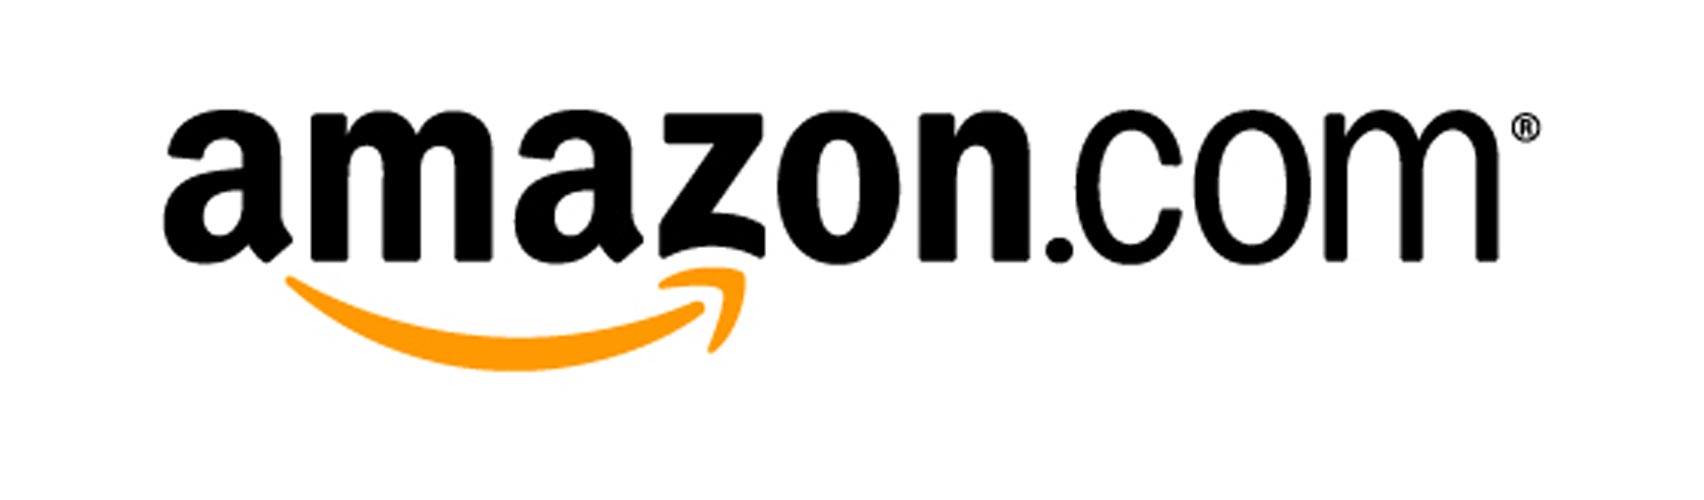 New Amazon Logo - 6 Key Takeaways From Amazon's Rise to The Top | Wiser Retail Strategies